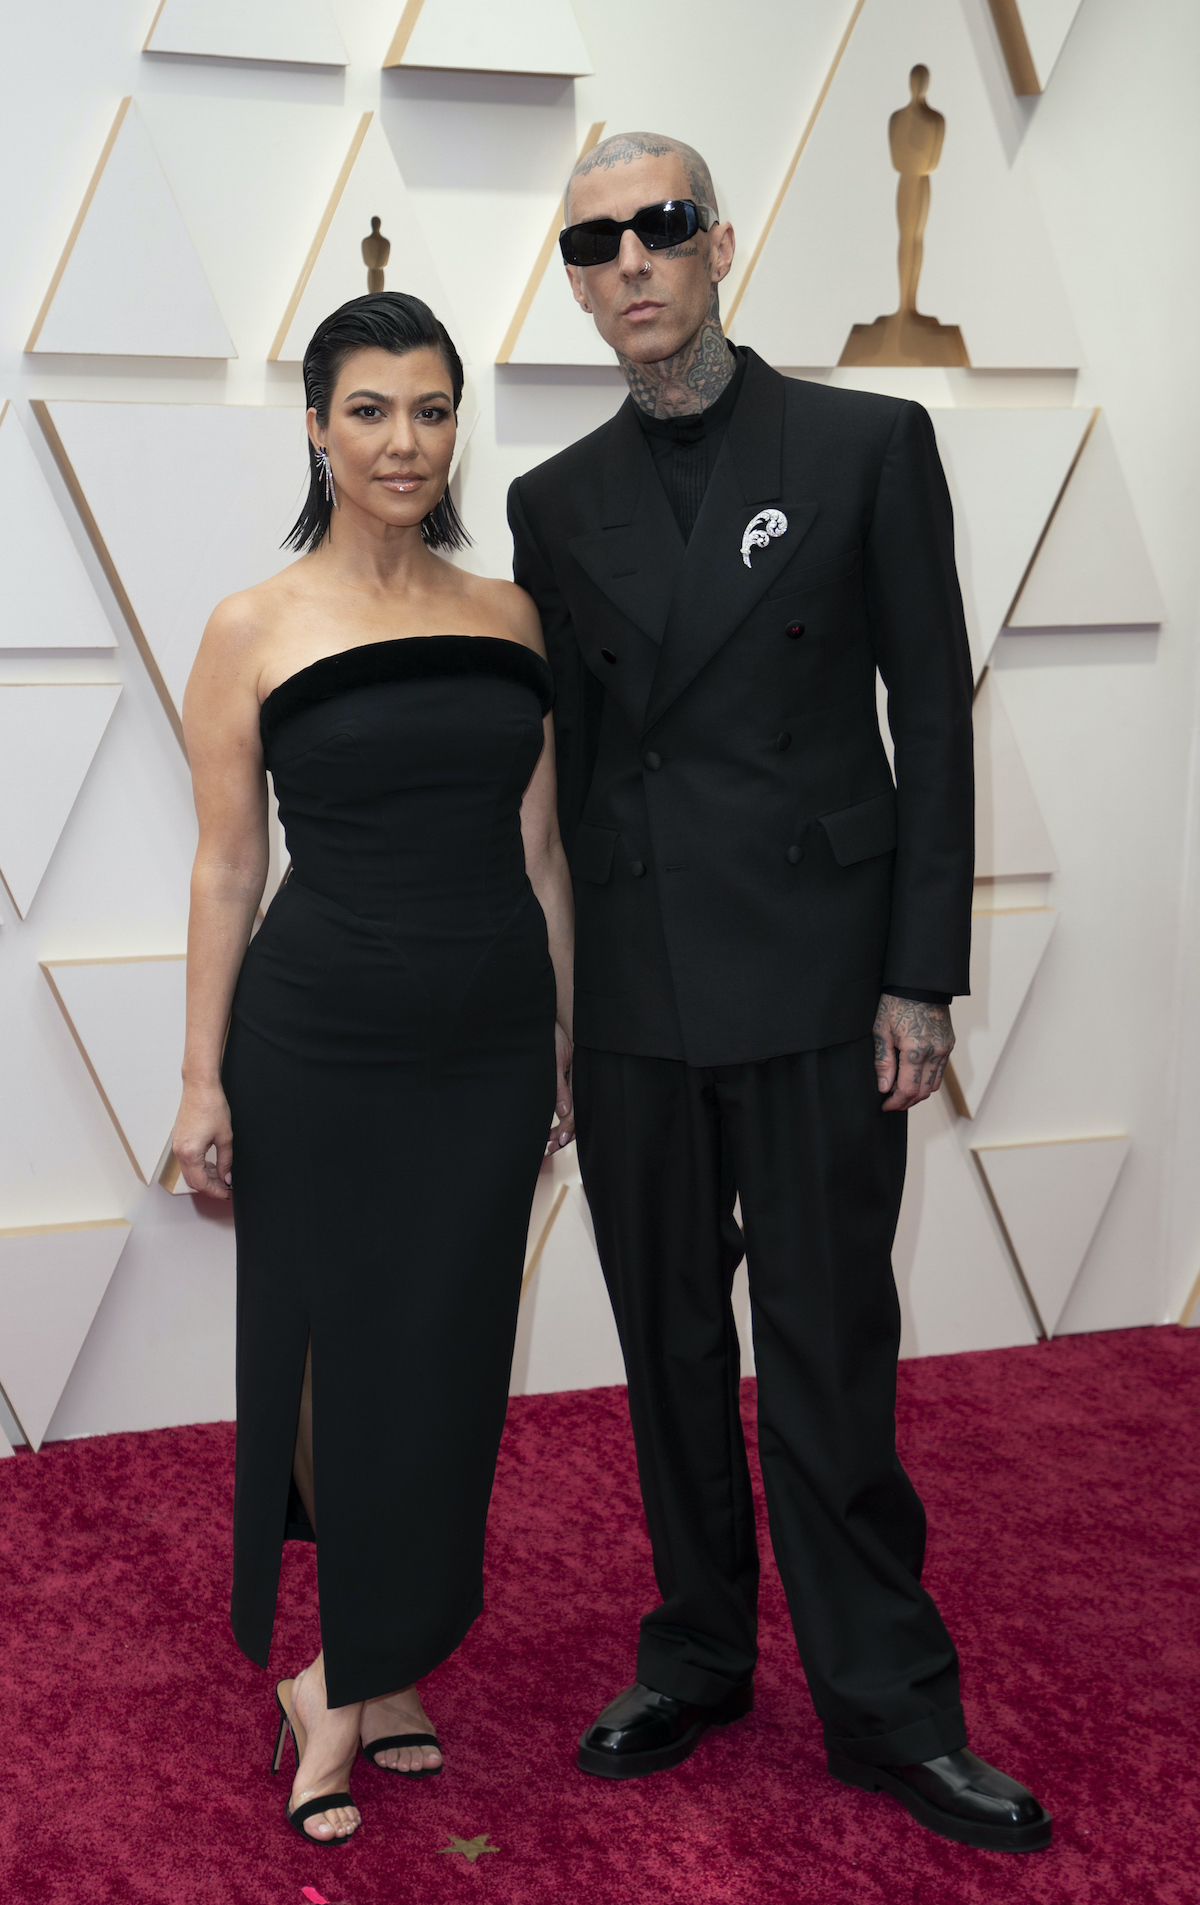 Kourtney Kardashian and Travis Barker The OSCARS red carpet arrivals